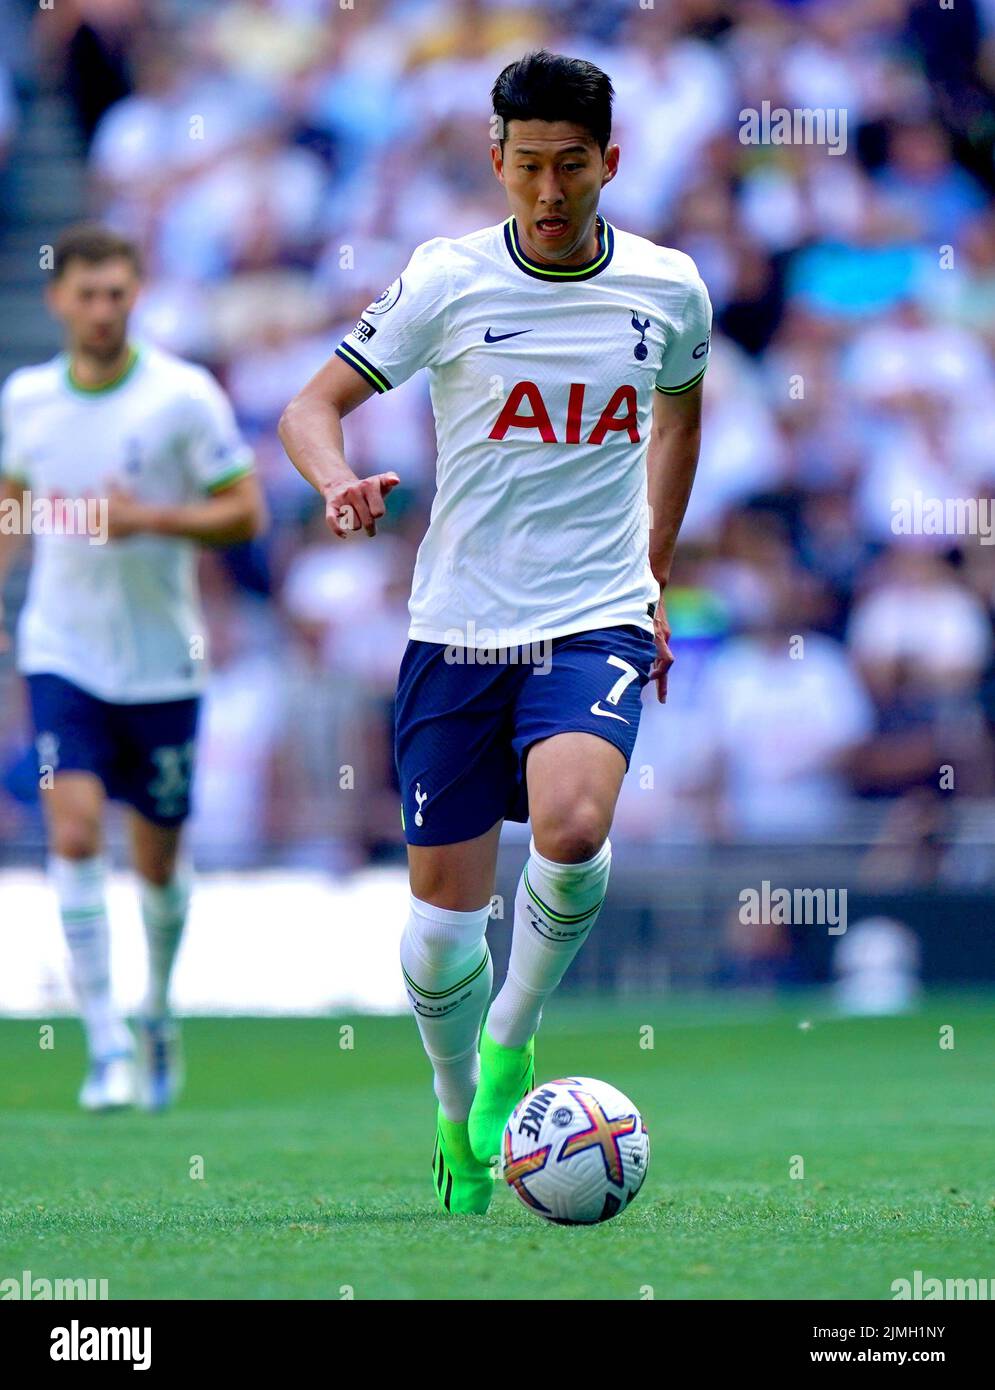 El Tottenham Hotspur's Son Heung-min durante el partido de la Premier League en el Tottenham Hotspur Stadium, Londres. Fecha de la foto: Sábado 6 de agosto de 2022. Foto de stock